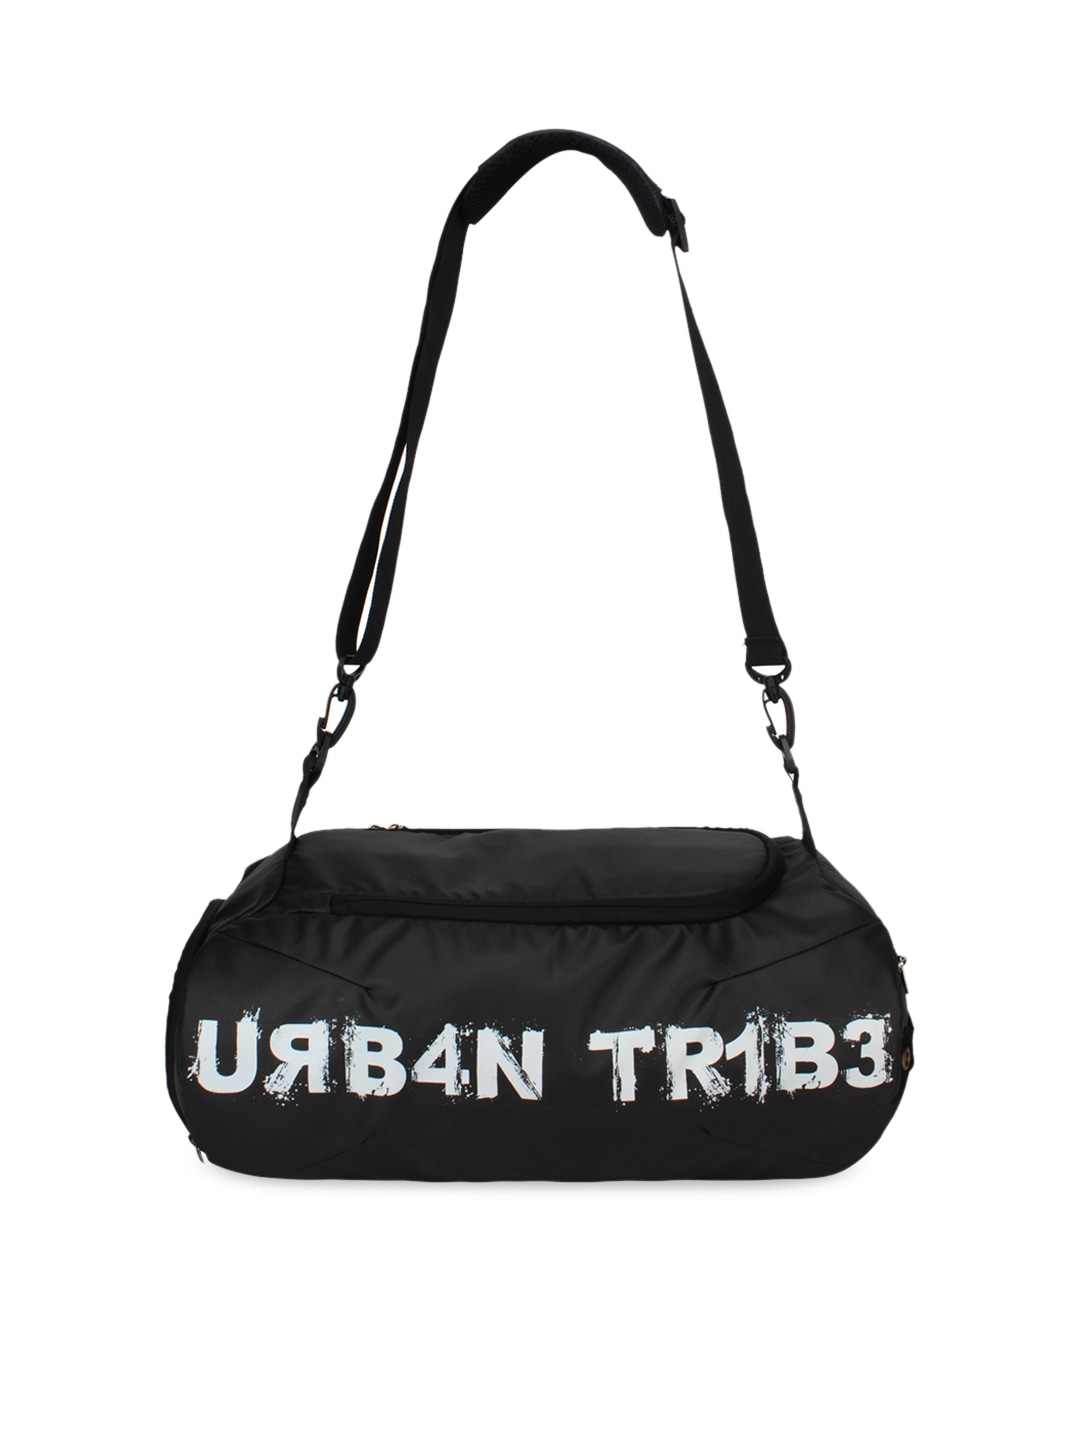 Accessories Duffel Bag | Urban Tribe Plank Black Gym Duffel Bag - KJ42211